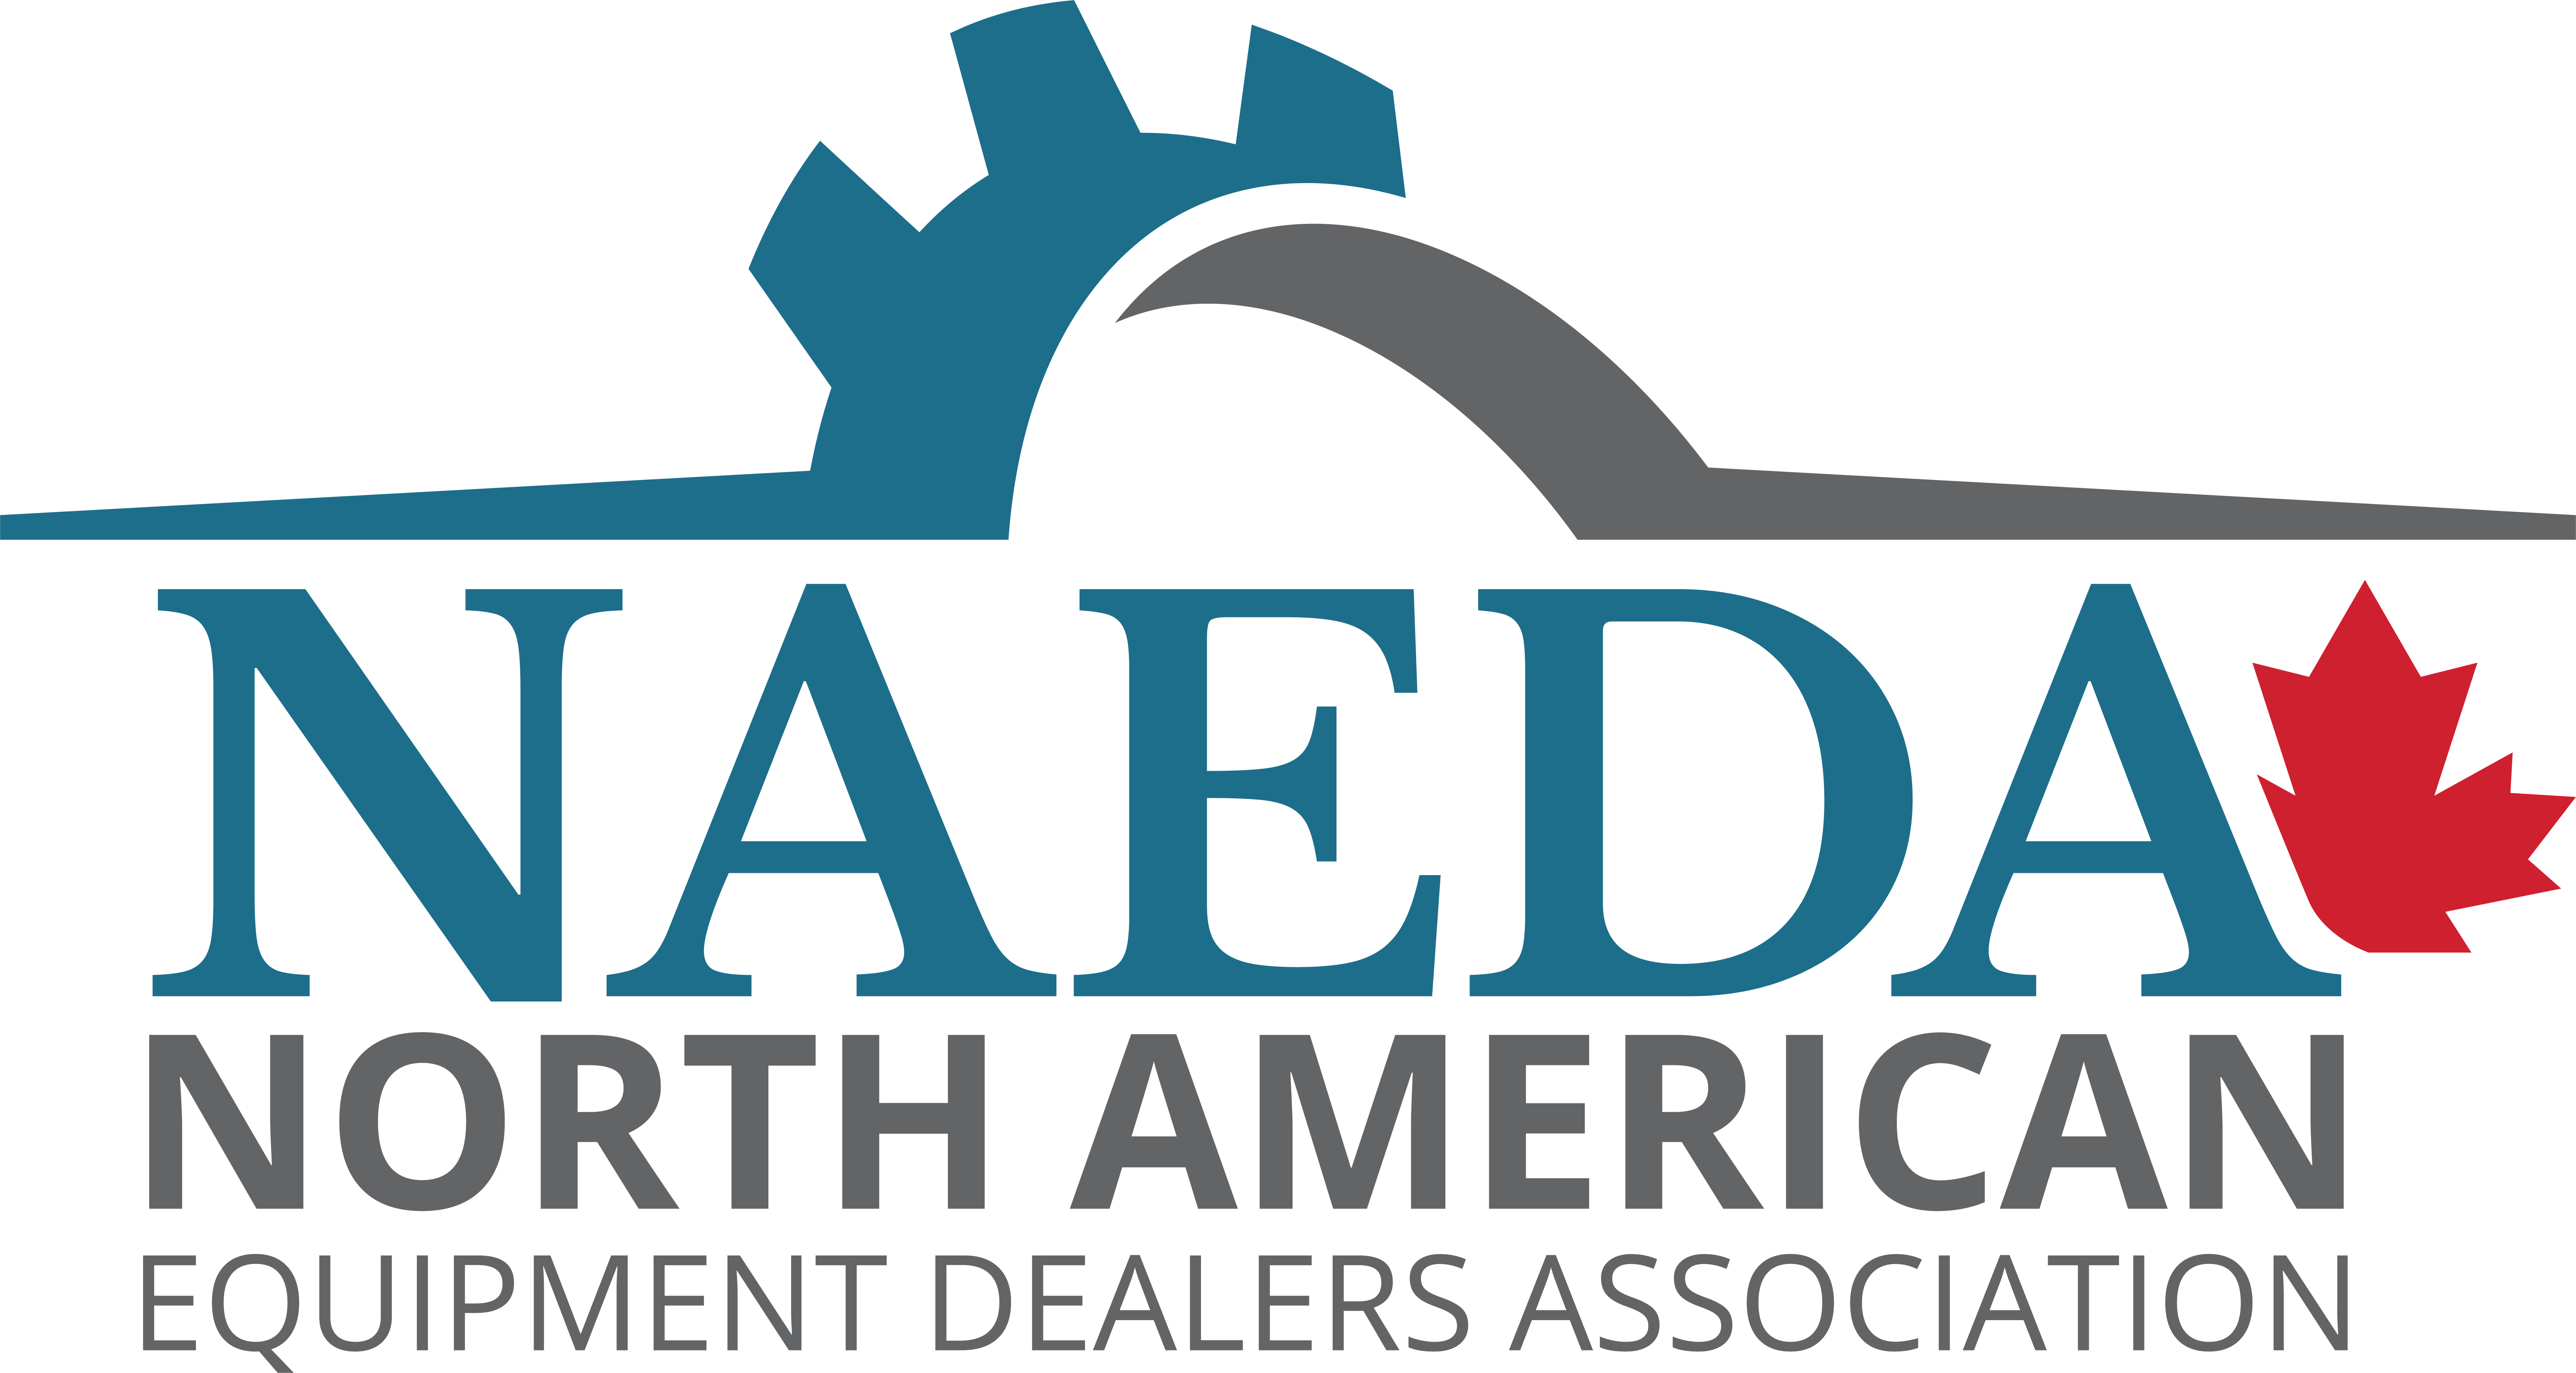 Western Equipment Dealers Association